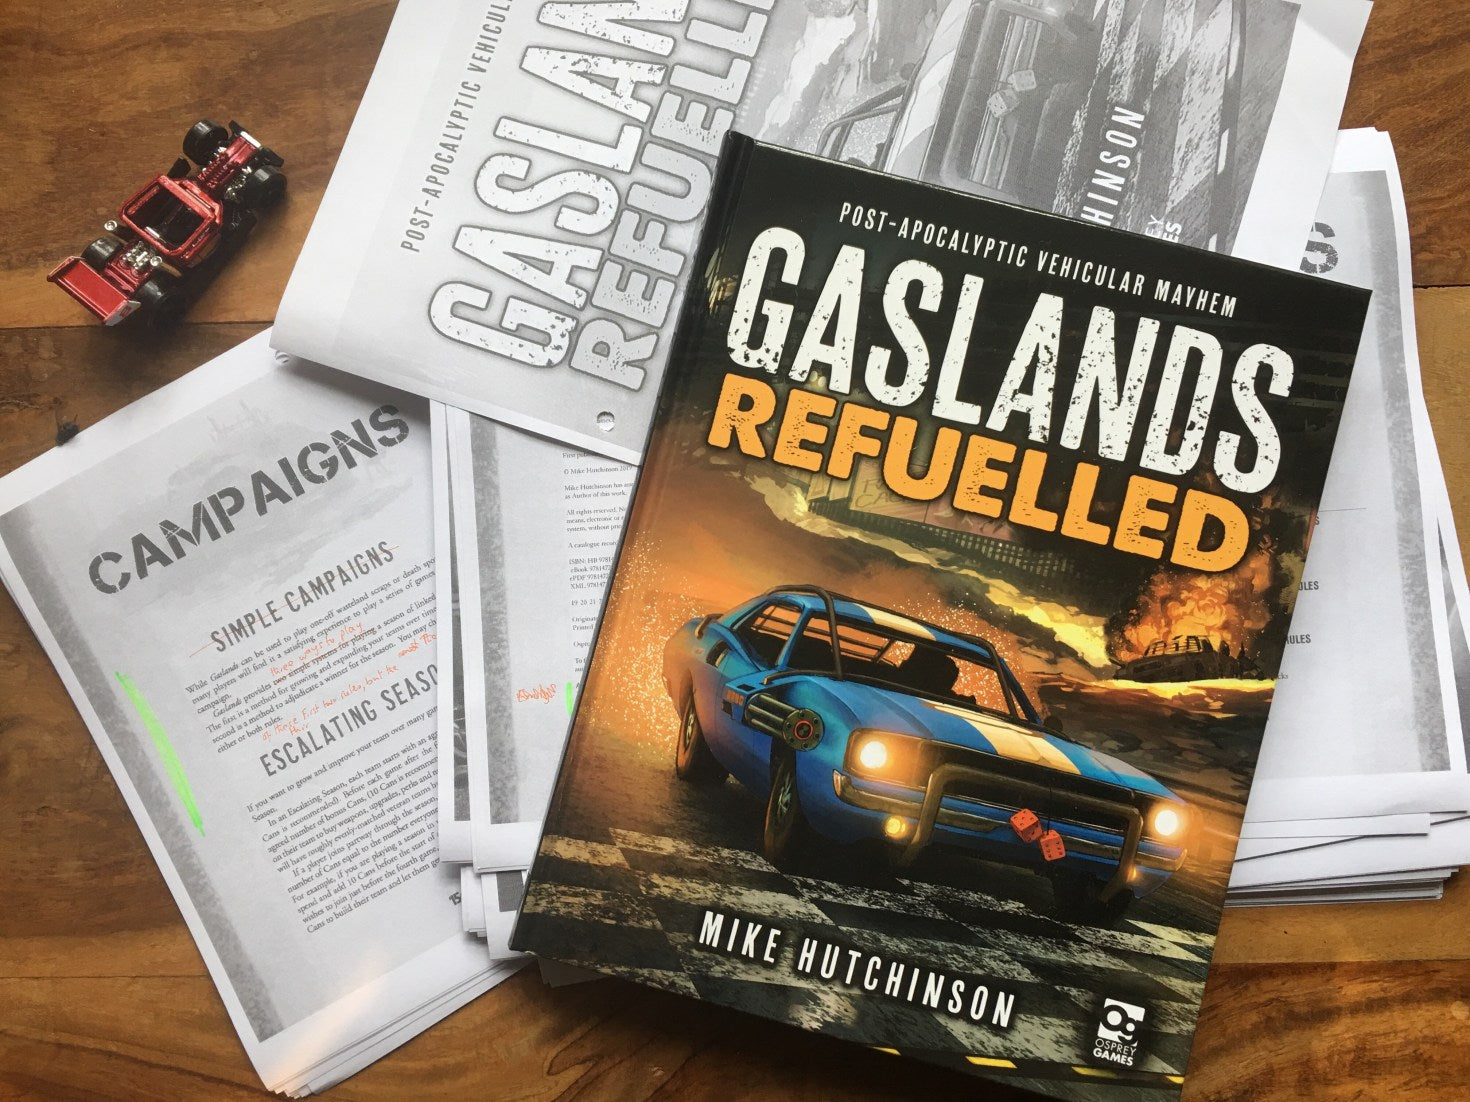 Gaslands - Post Apocalyptic Vehicular Mayhem: Refuelled - Bards & Cards